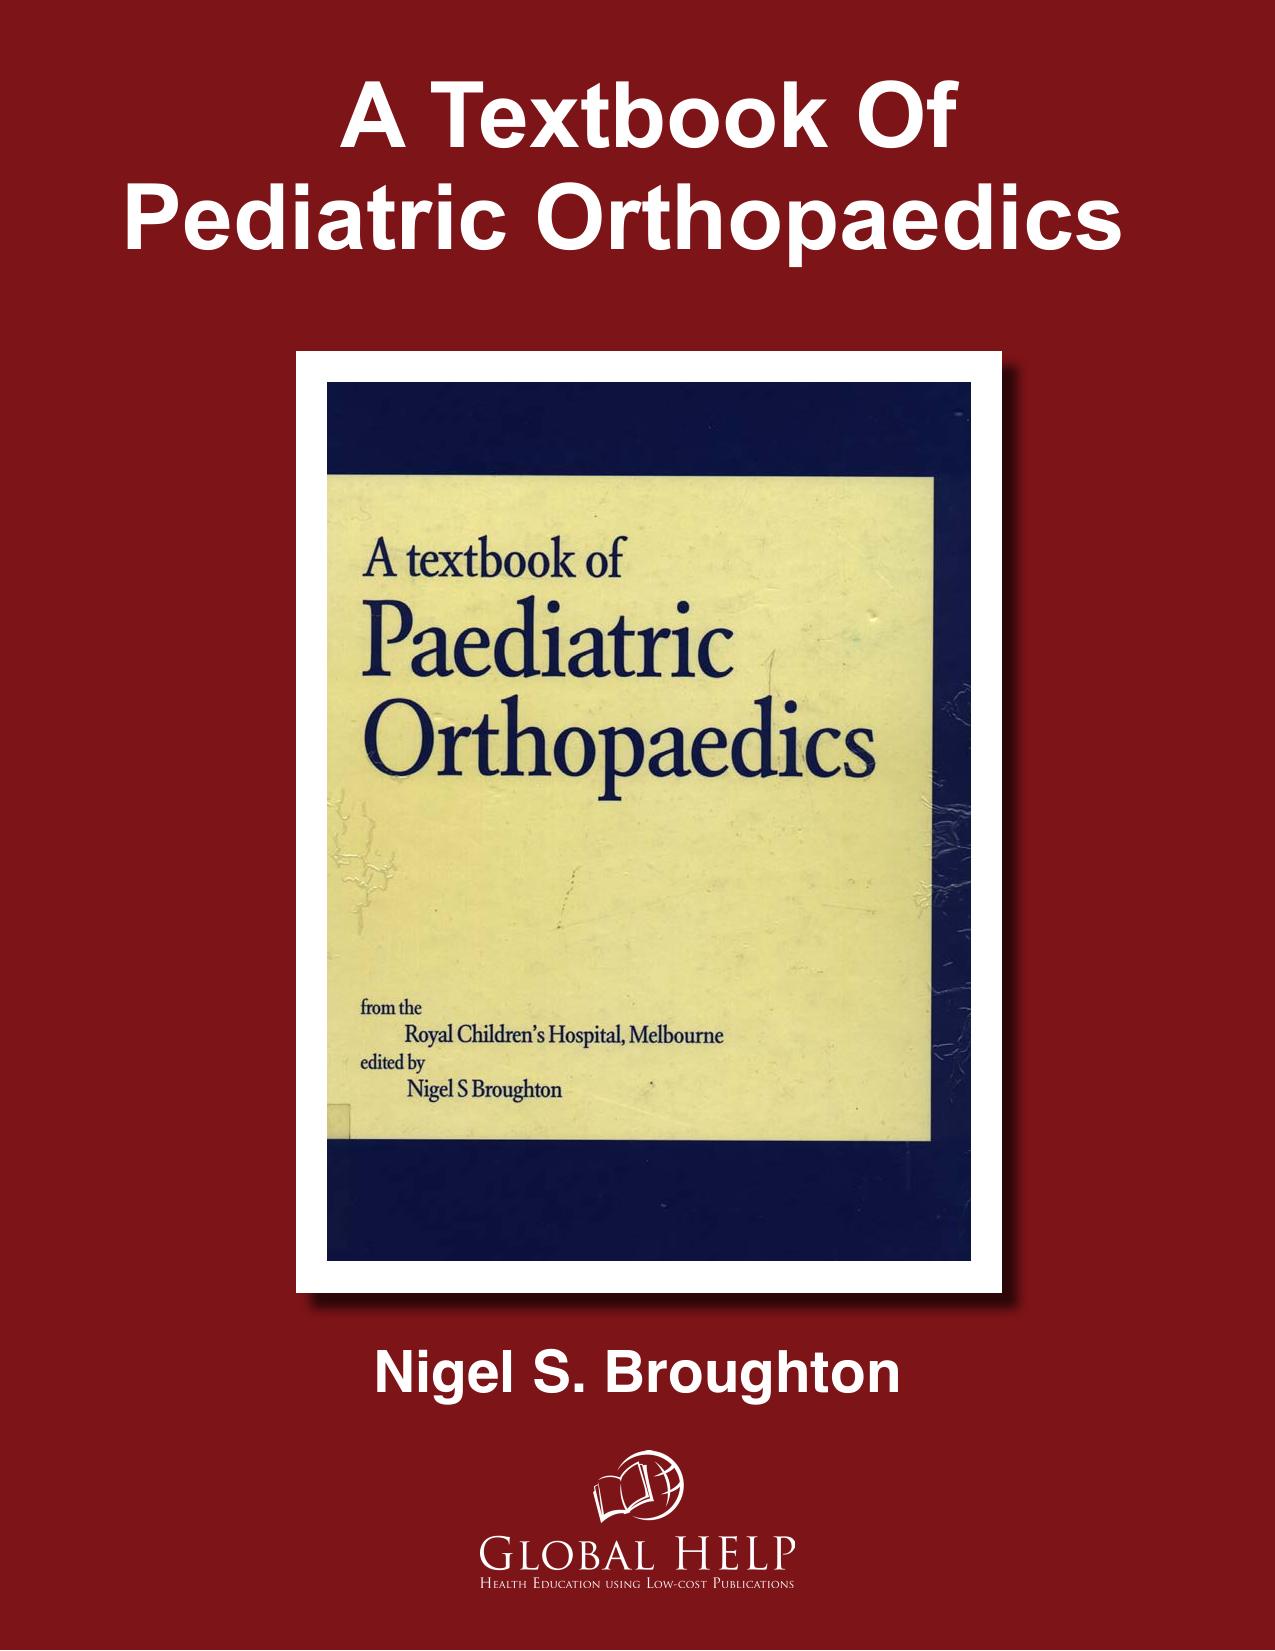 A Textbook Of Pediatric Orhopaedics